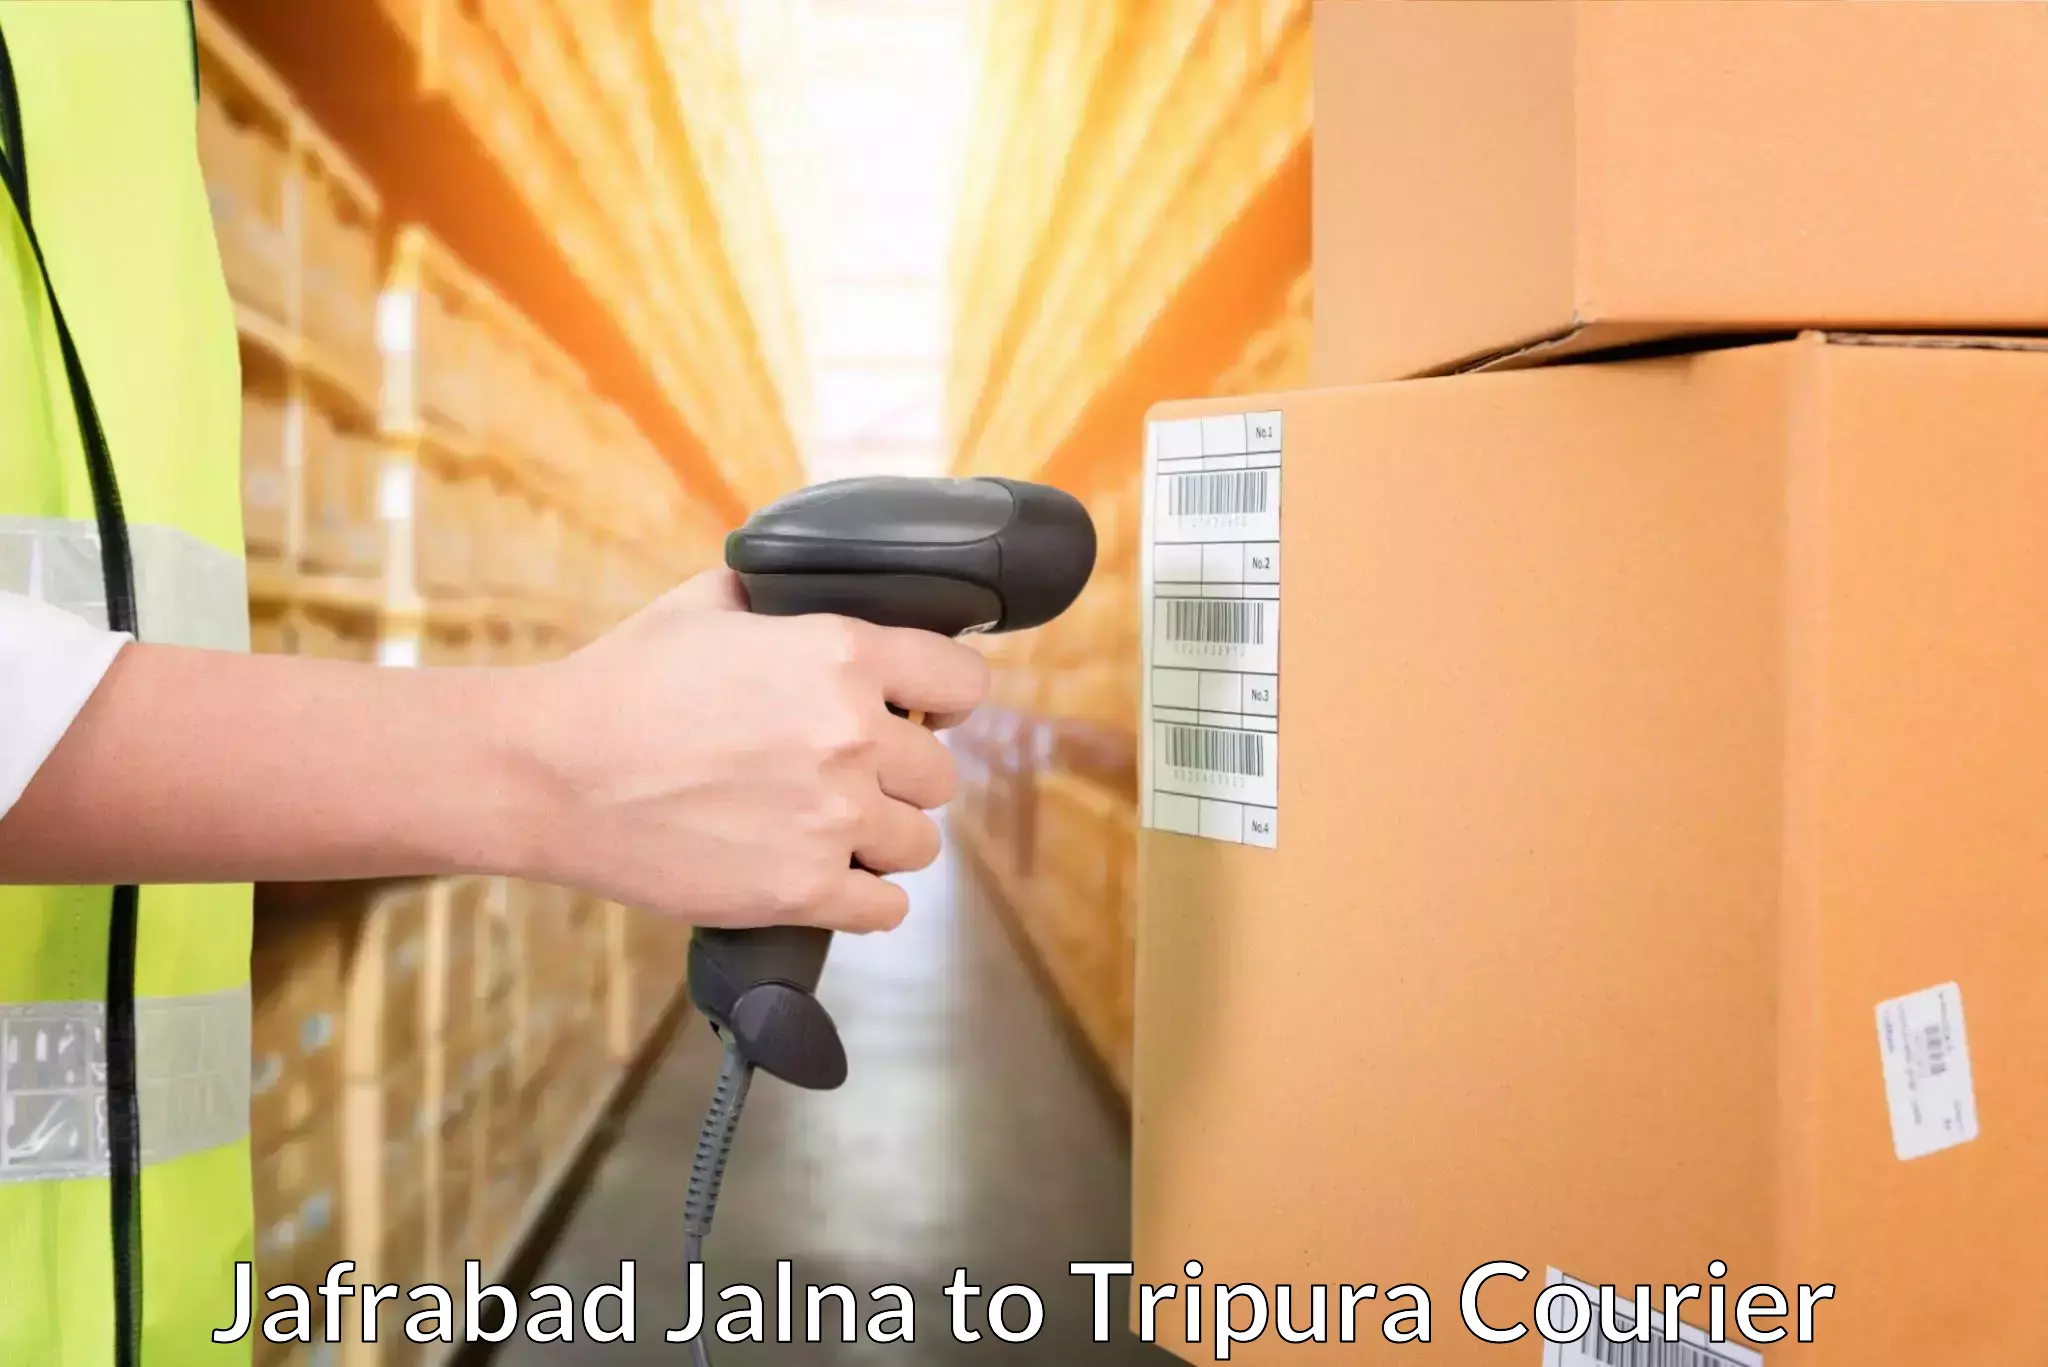 Courier service partnerships Jafrabad Jalna to Aambasa